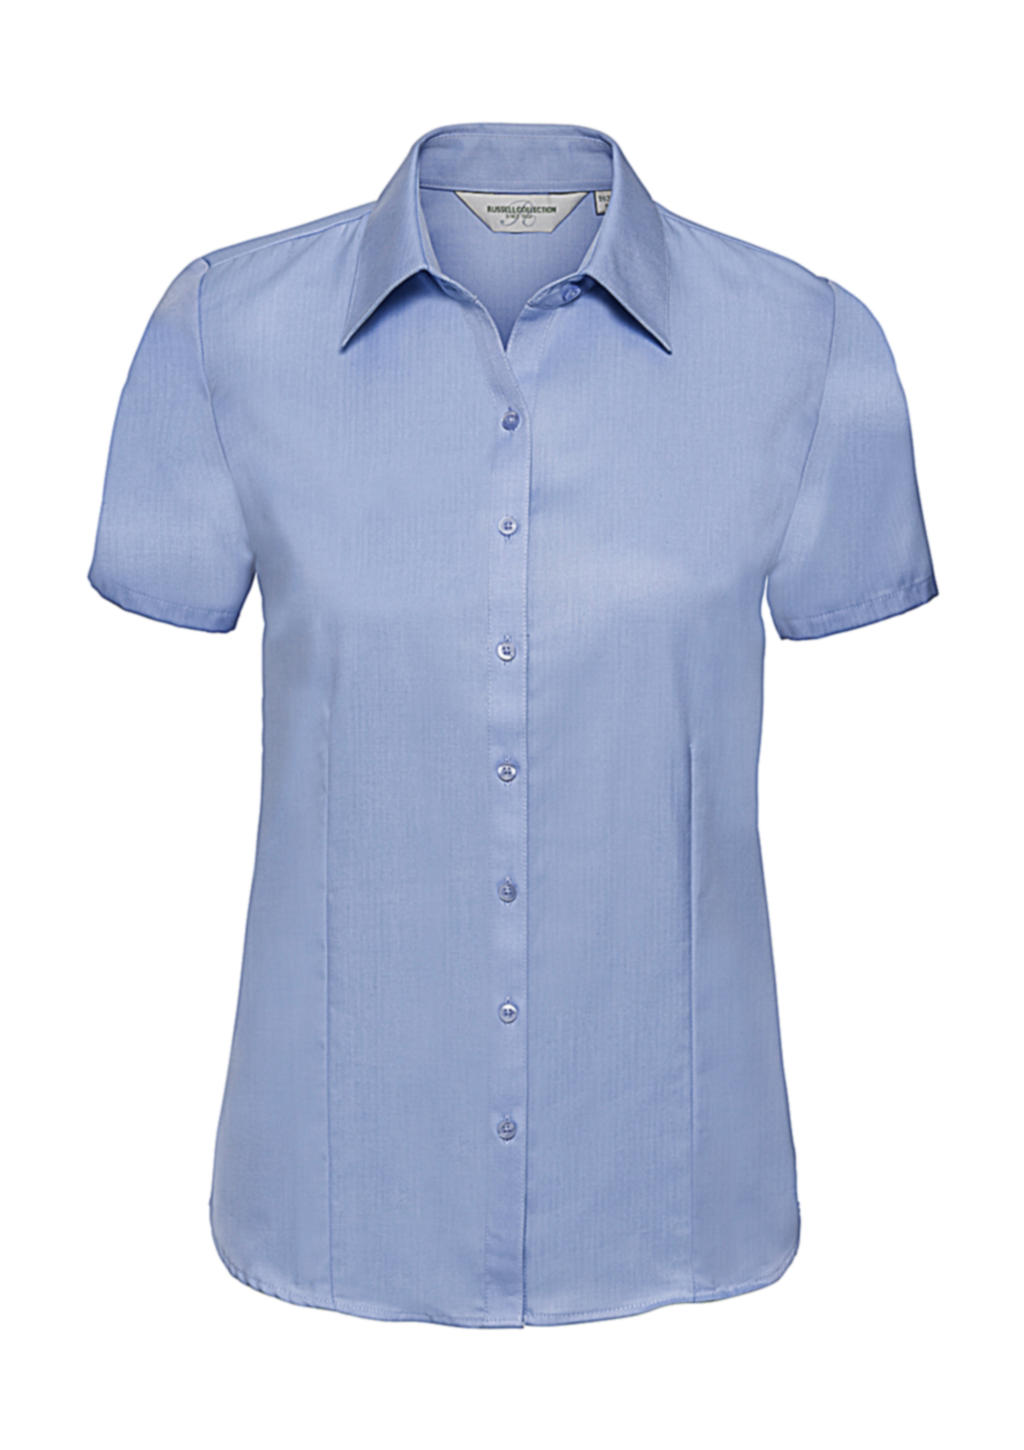  Ladies Herringbone Shirt in Farbe Light Blue